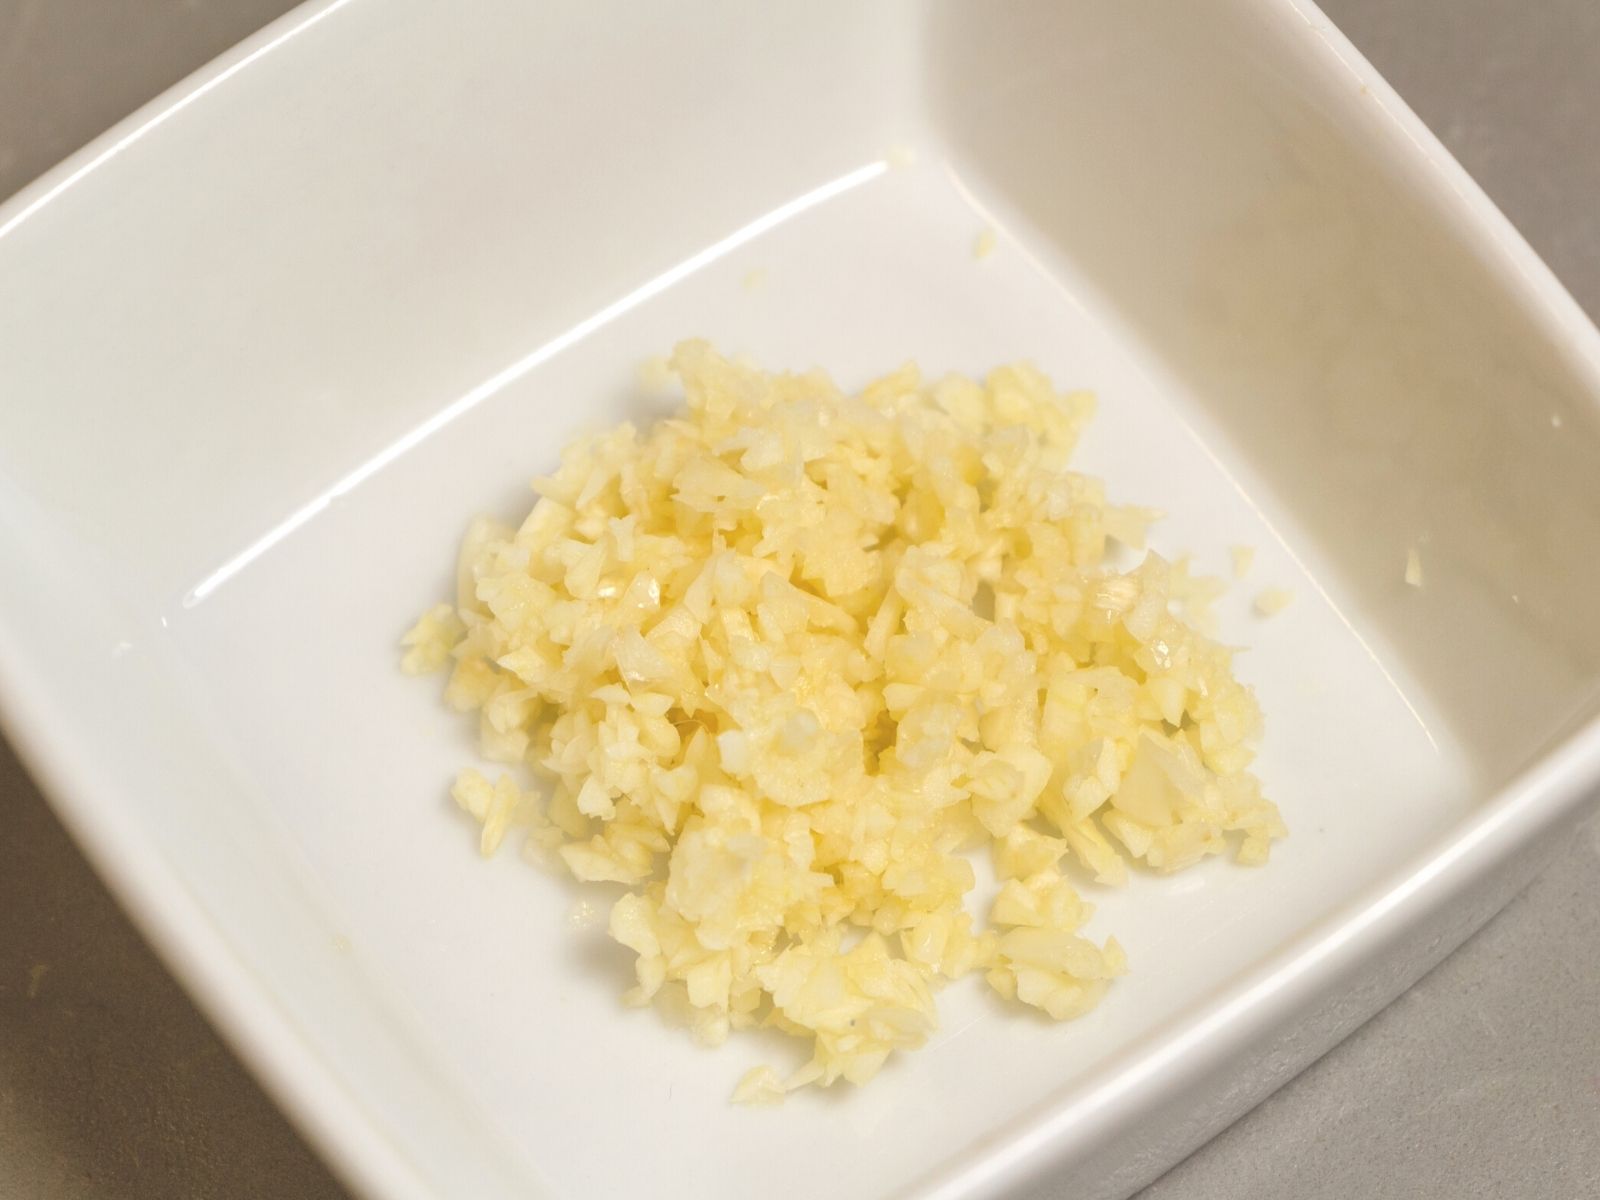 Minced garlic in a white bowl.